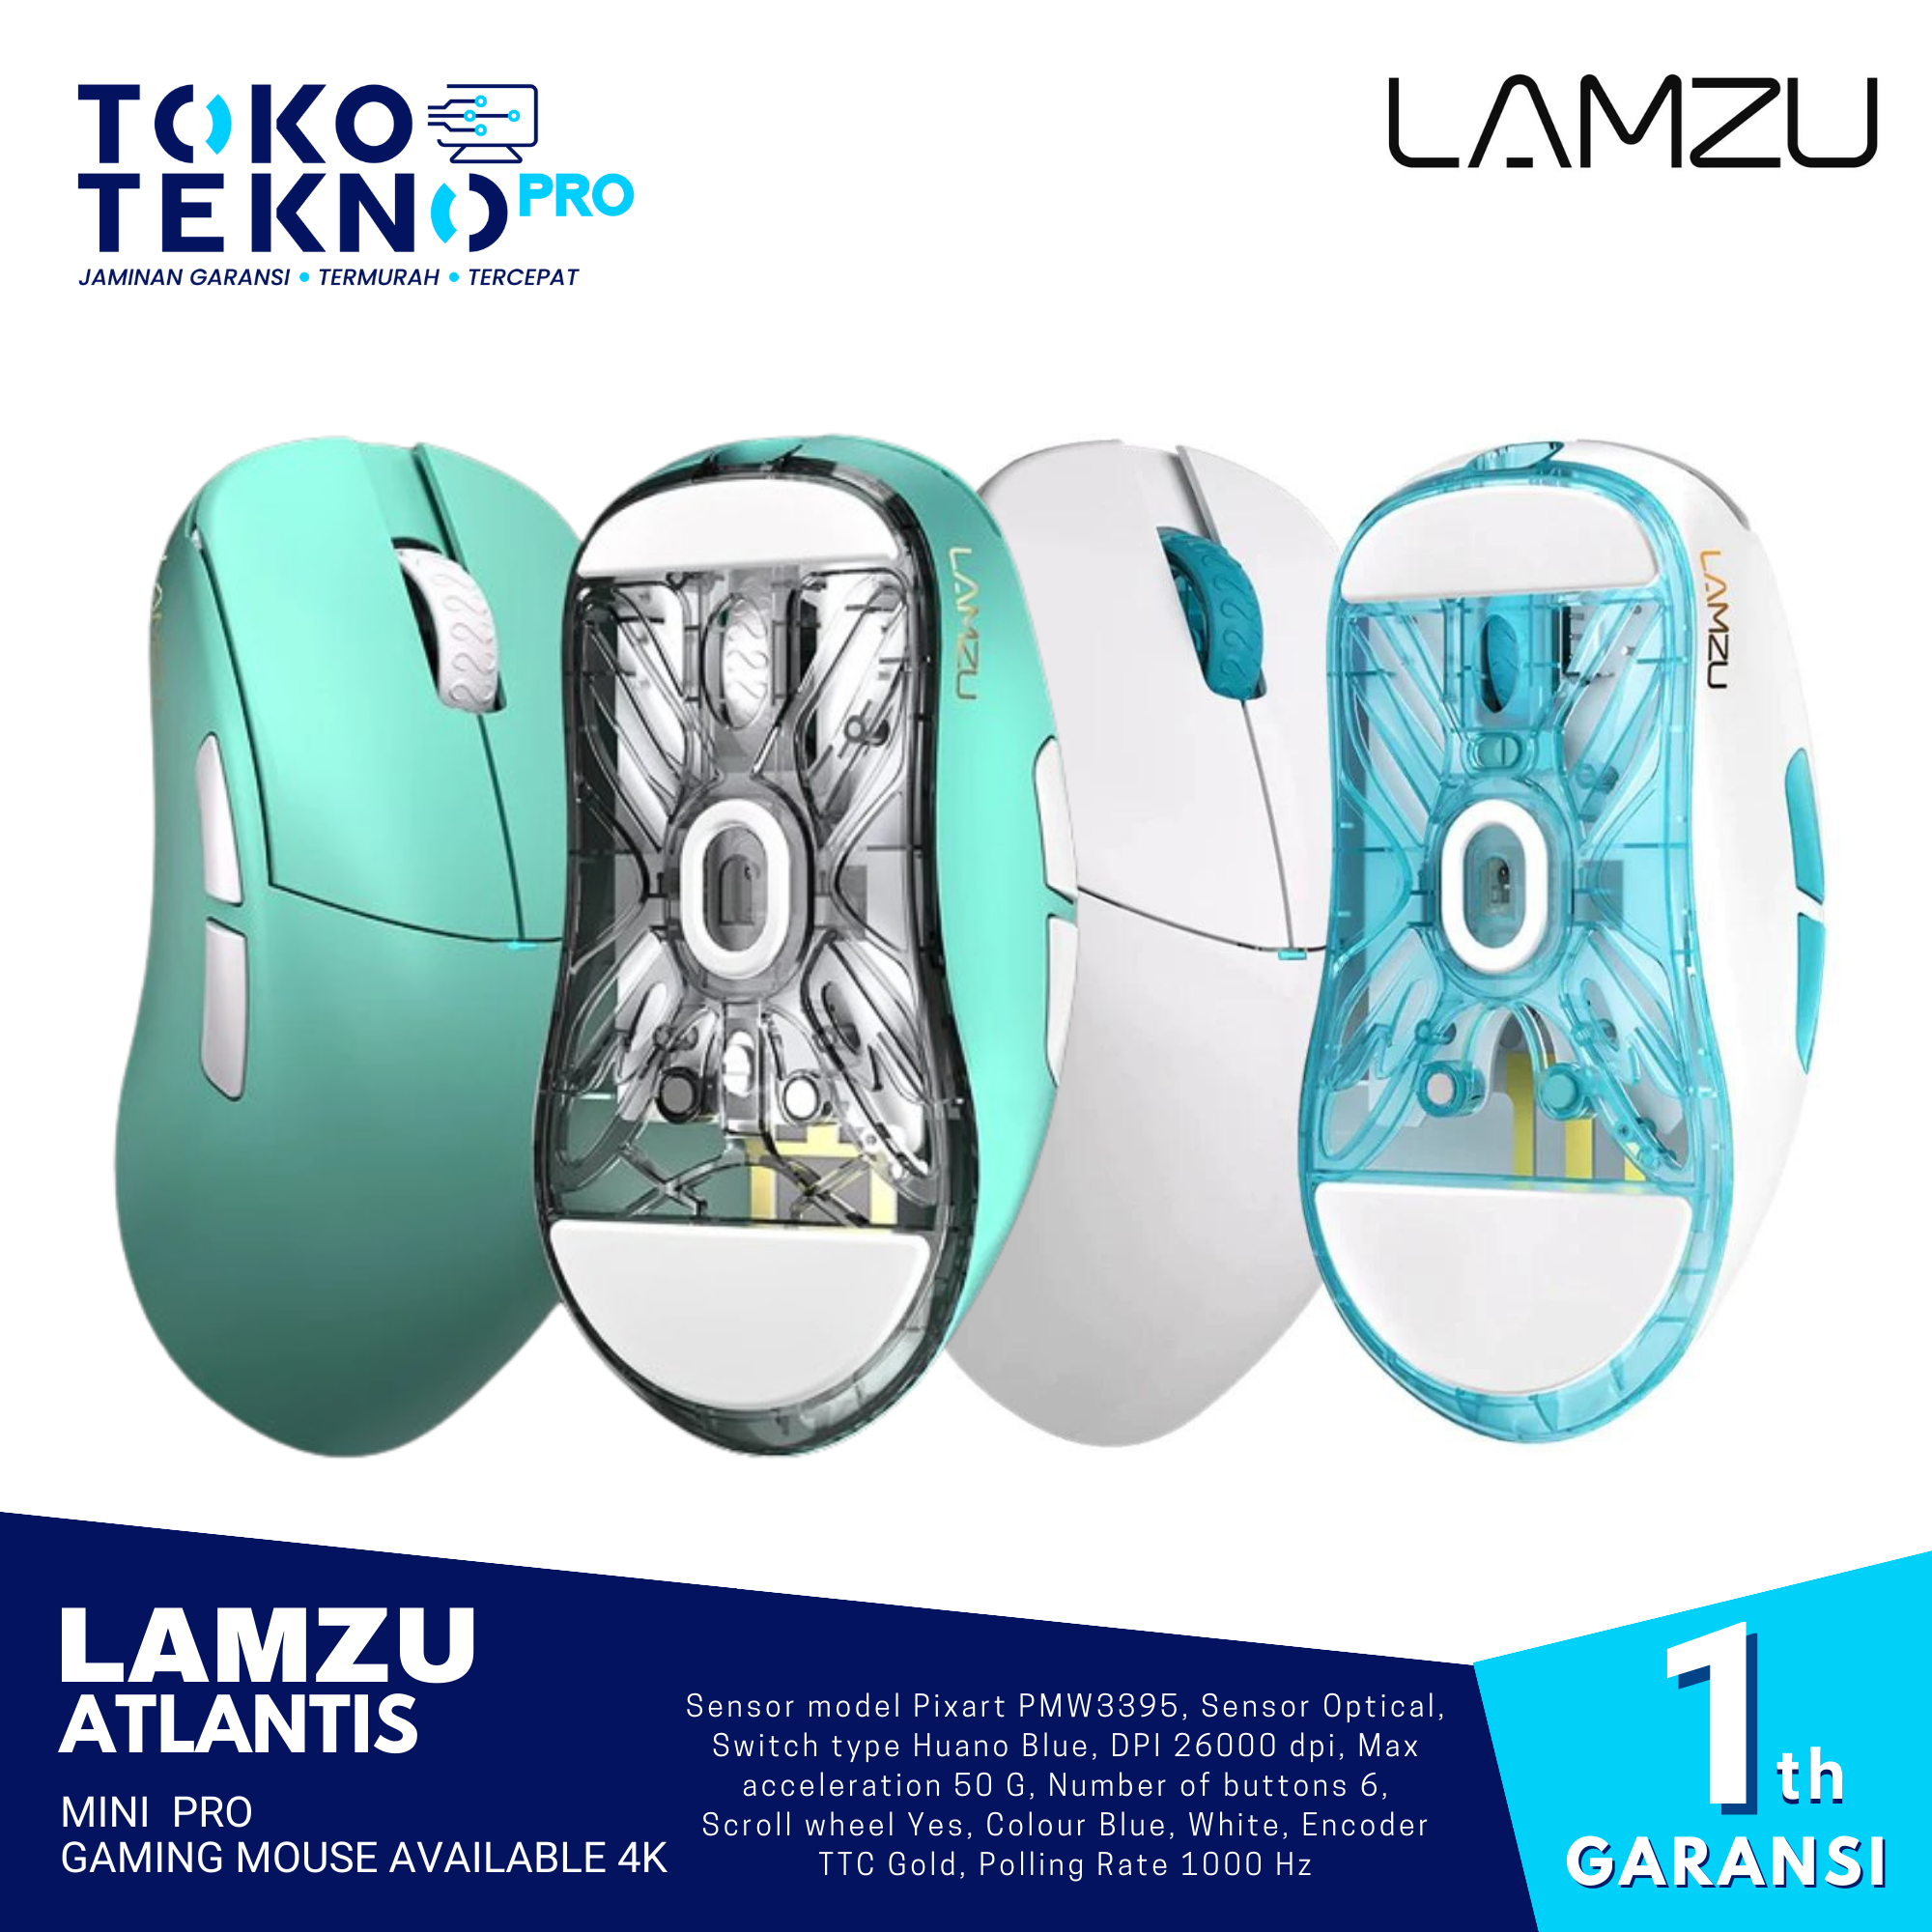 Lamzu Atlantis Mini Pro Wireless Superlight Gaming Mouse Available 4K